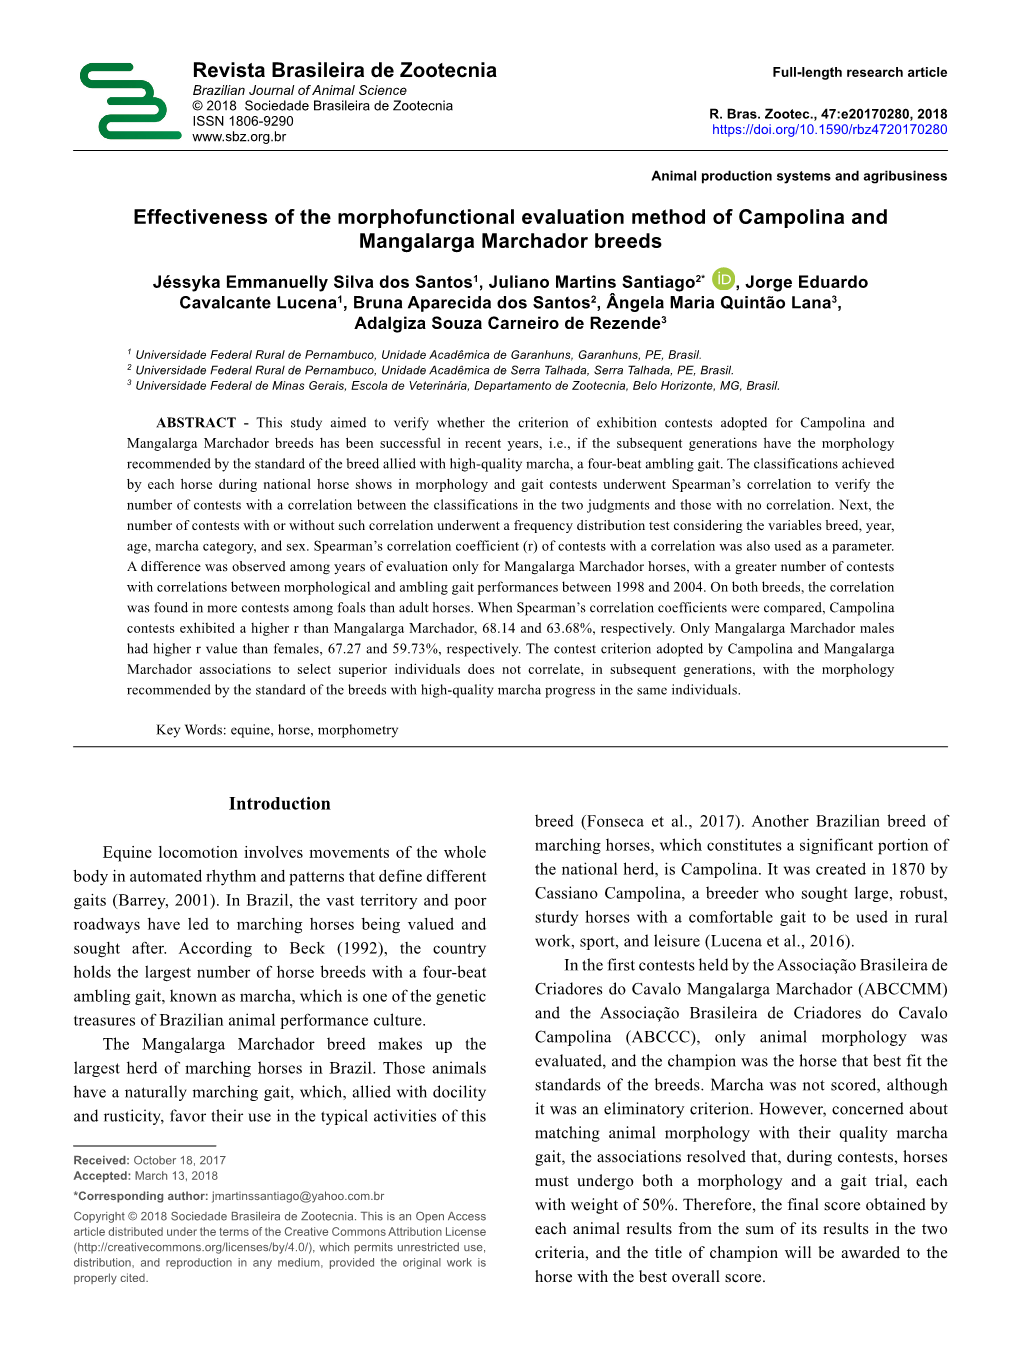 Effectiveness of the Morphofunctional Evaluation Method of Campolina and Mangalarga Marchador Breeds